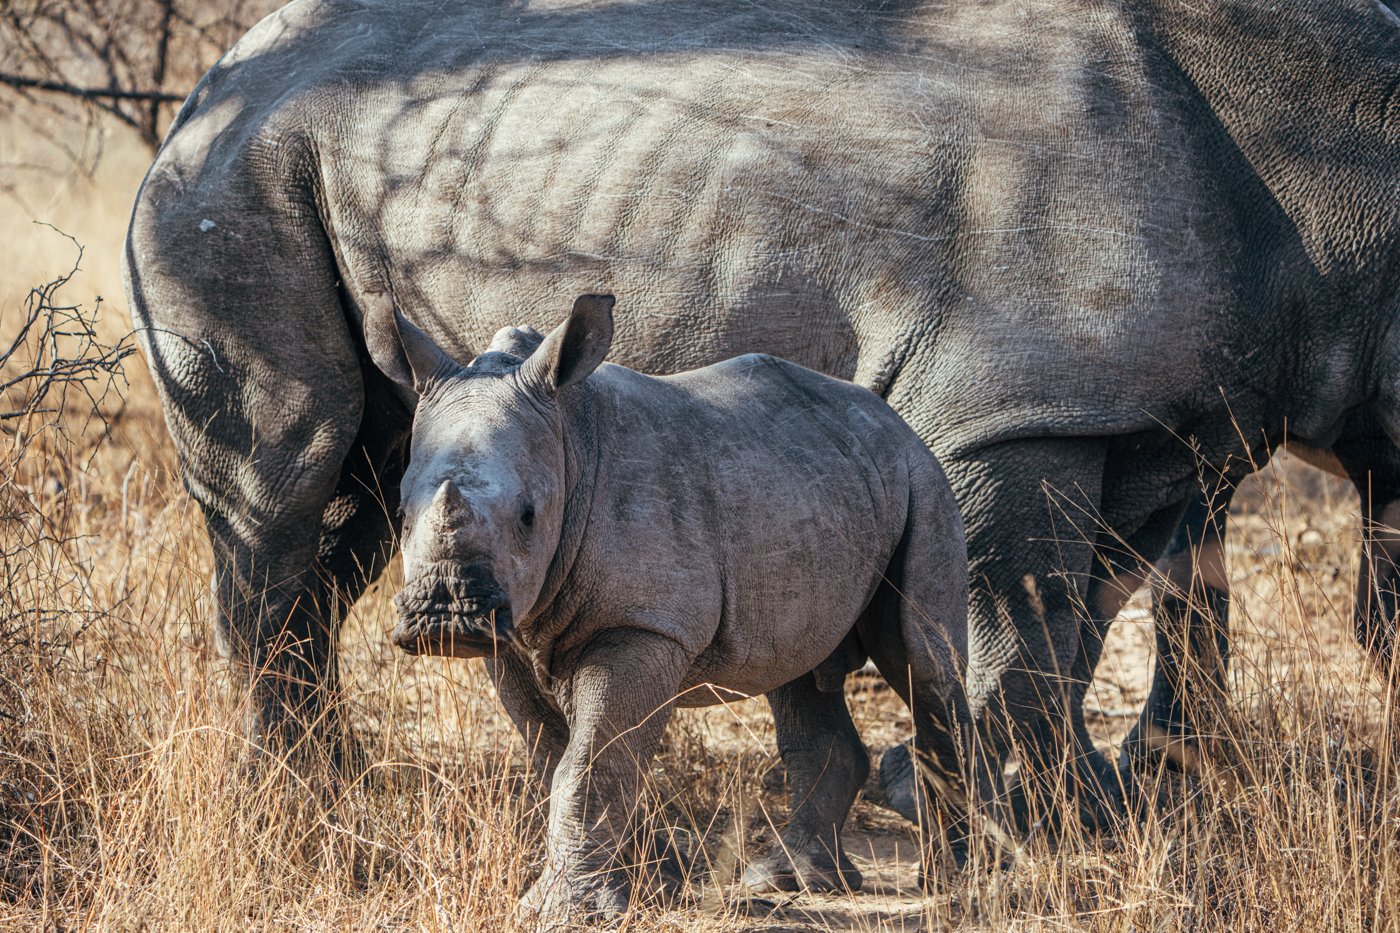 A mother and baby rhino in Safari.